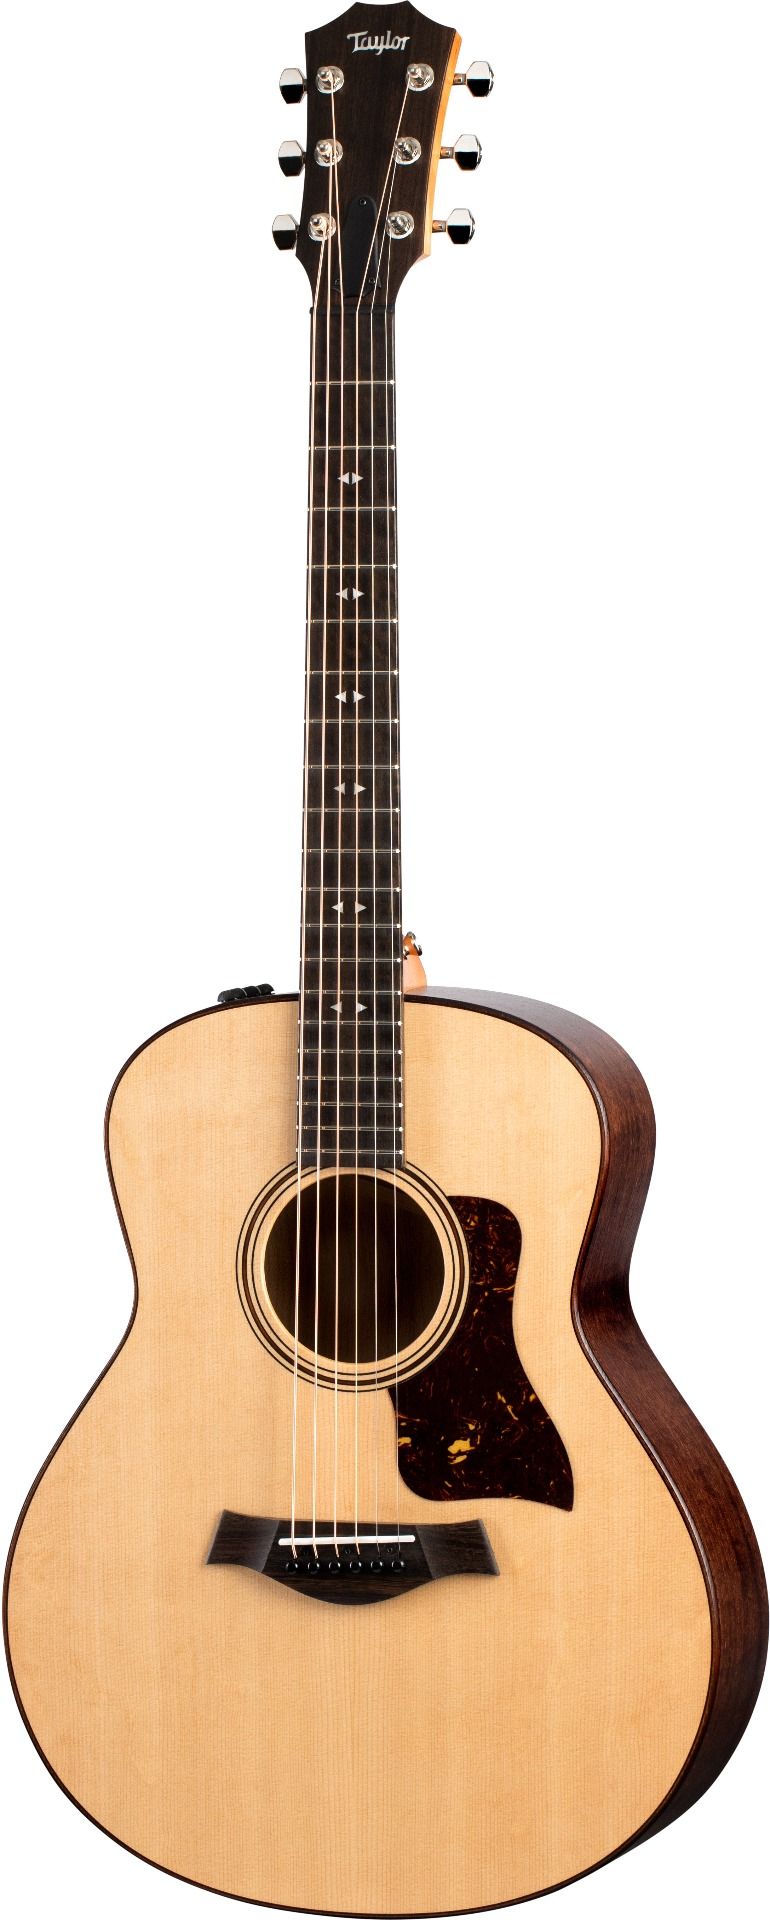 Taylor GTe Urban Ash Acoustic Guitar Spokane sale Hoffman Music 00887766107149